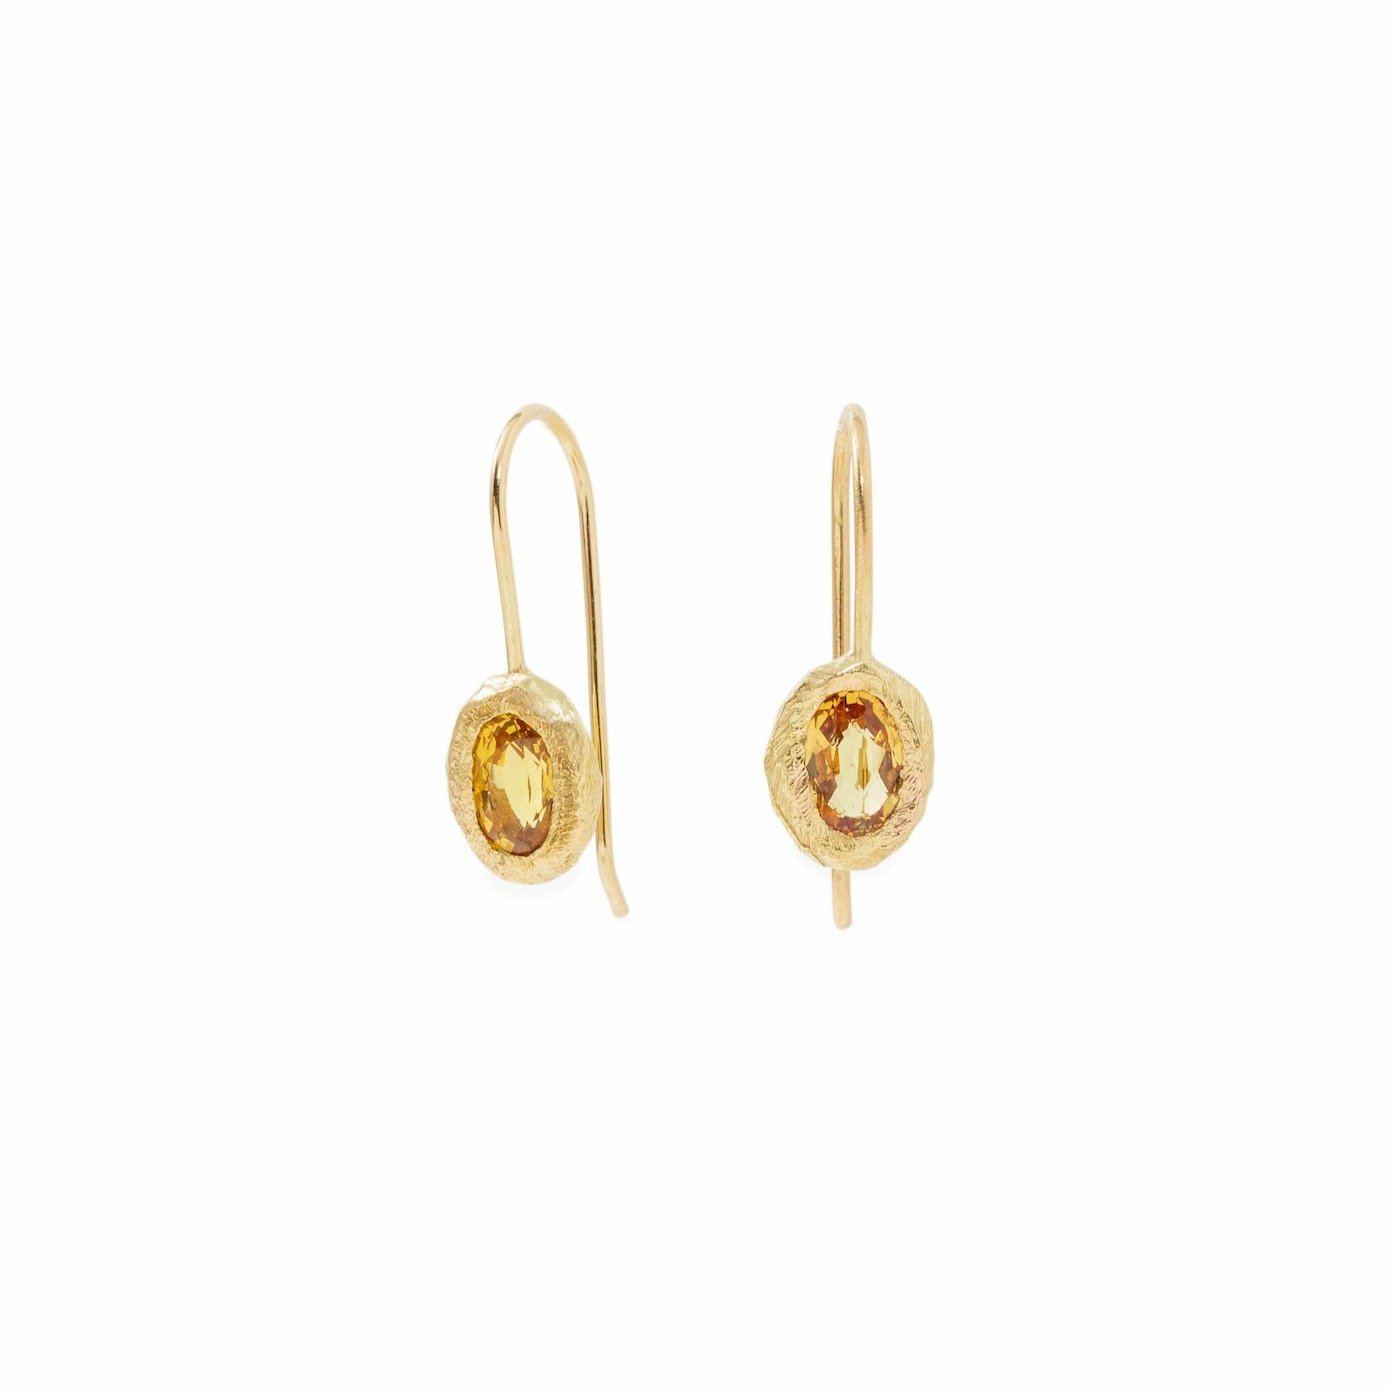 Handmade oval sapphire earrings in 18kt gold